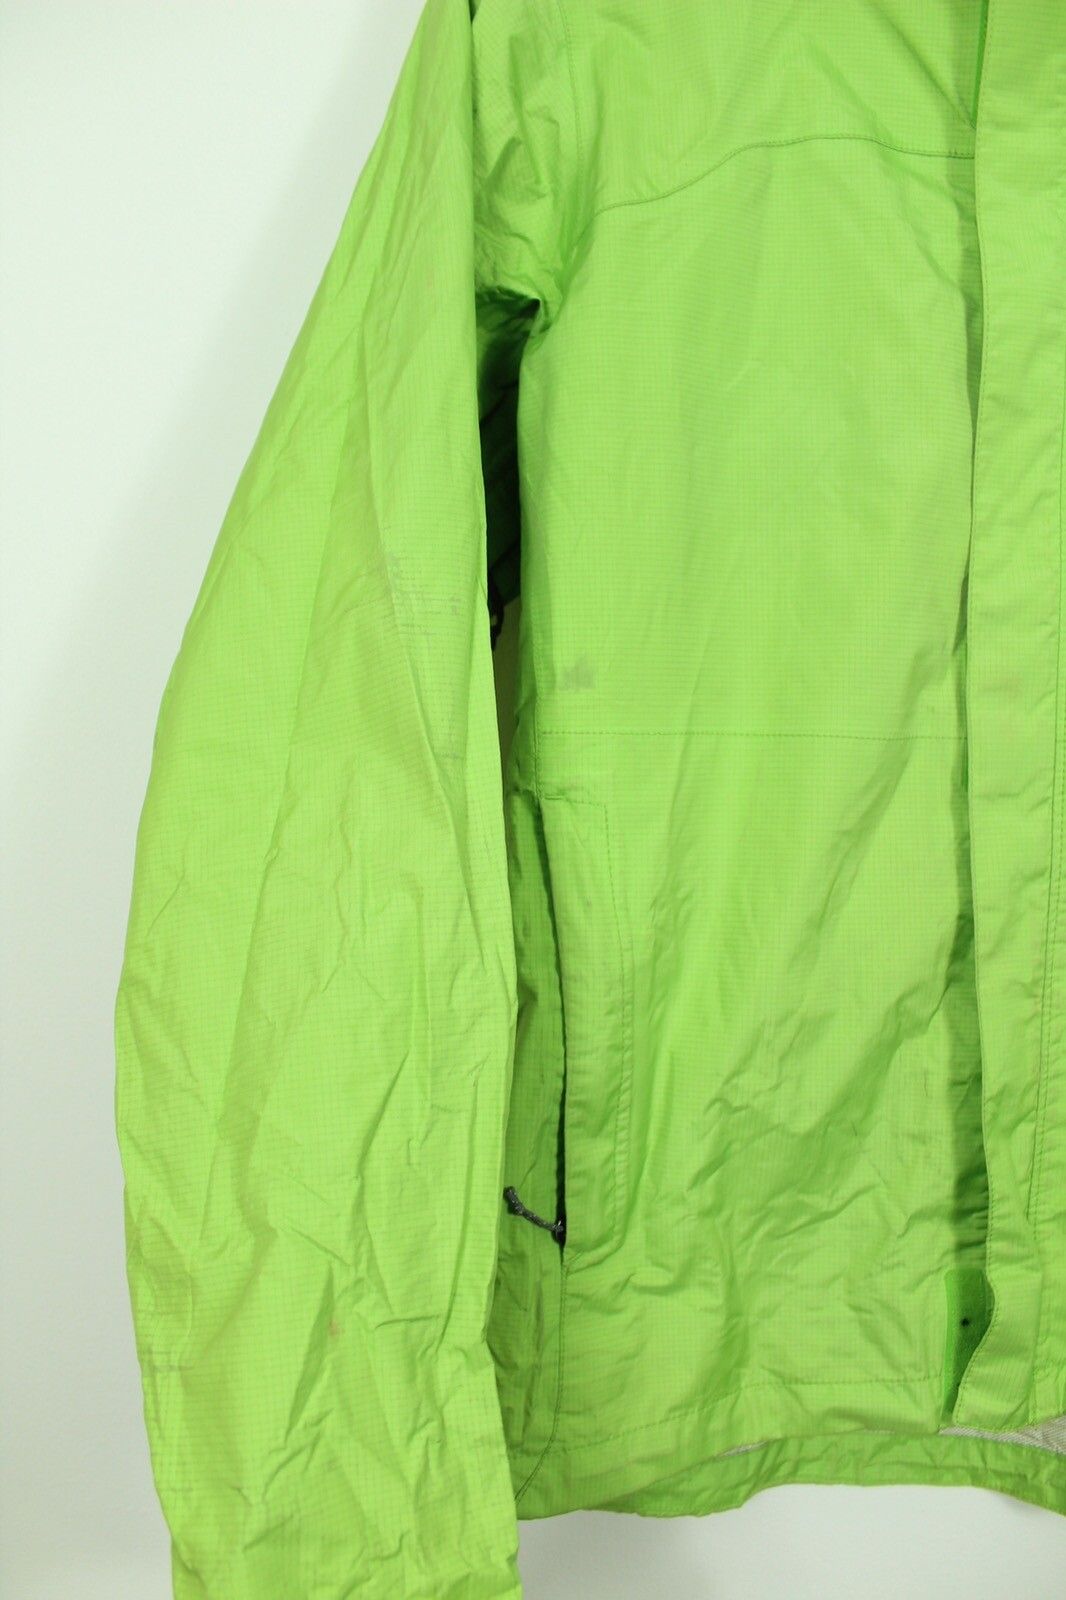 Patagonia Vintage Patagonia Windbreaker Light Jacket Green Size US M / EU 48-50 / 2 - 6 Thumbnail